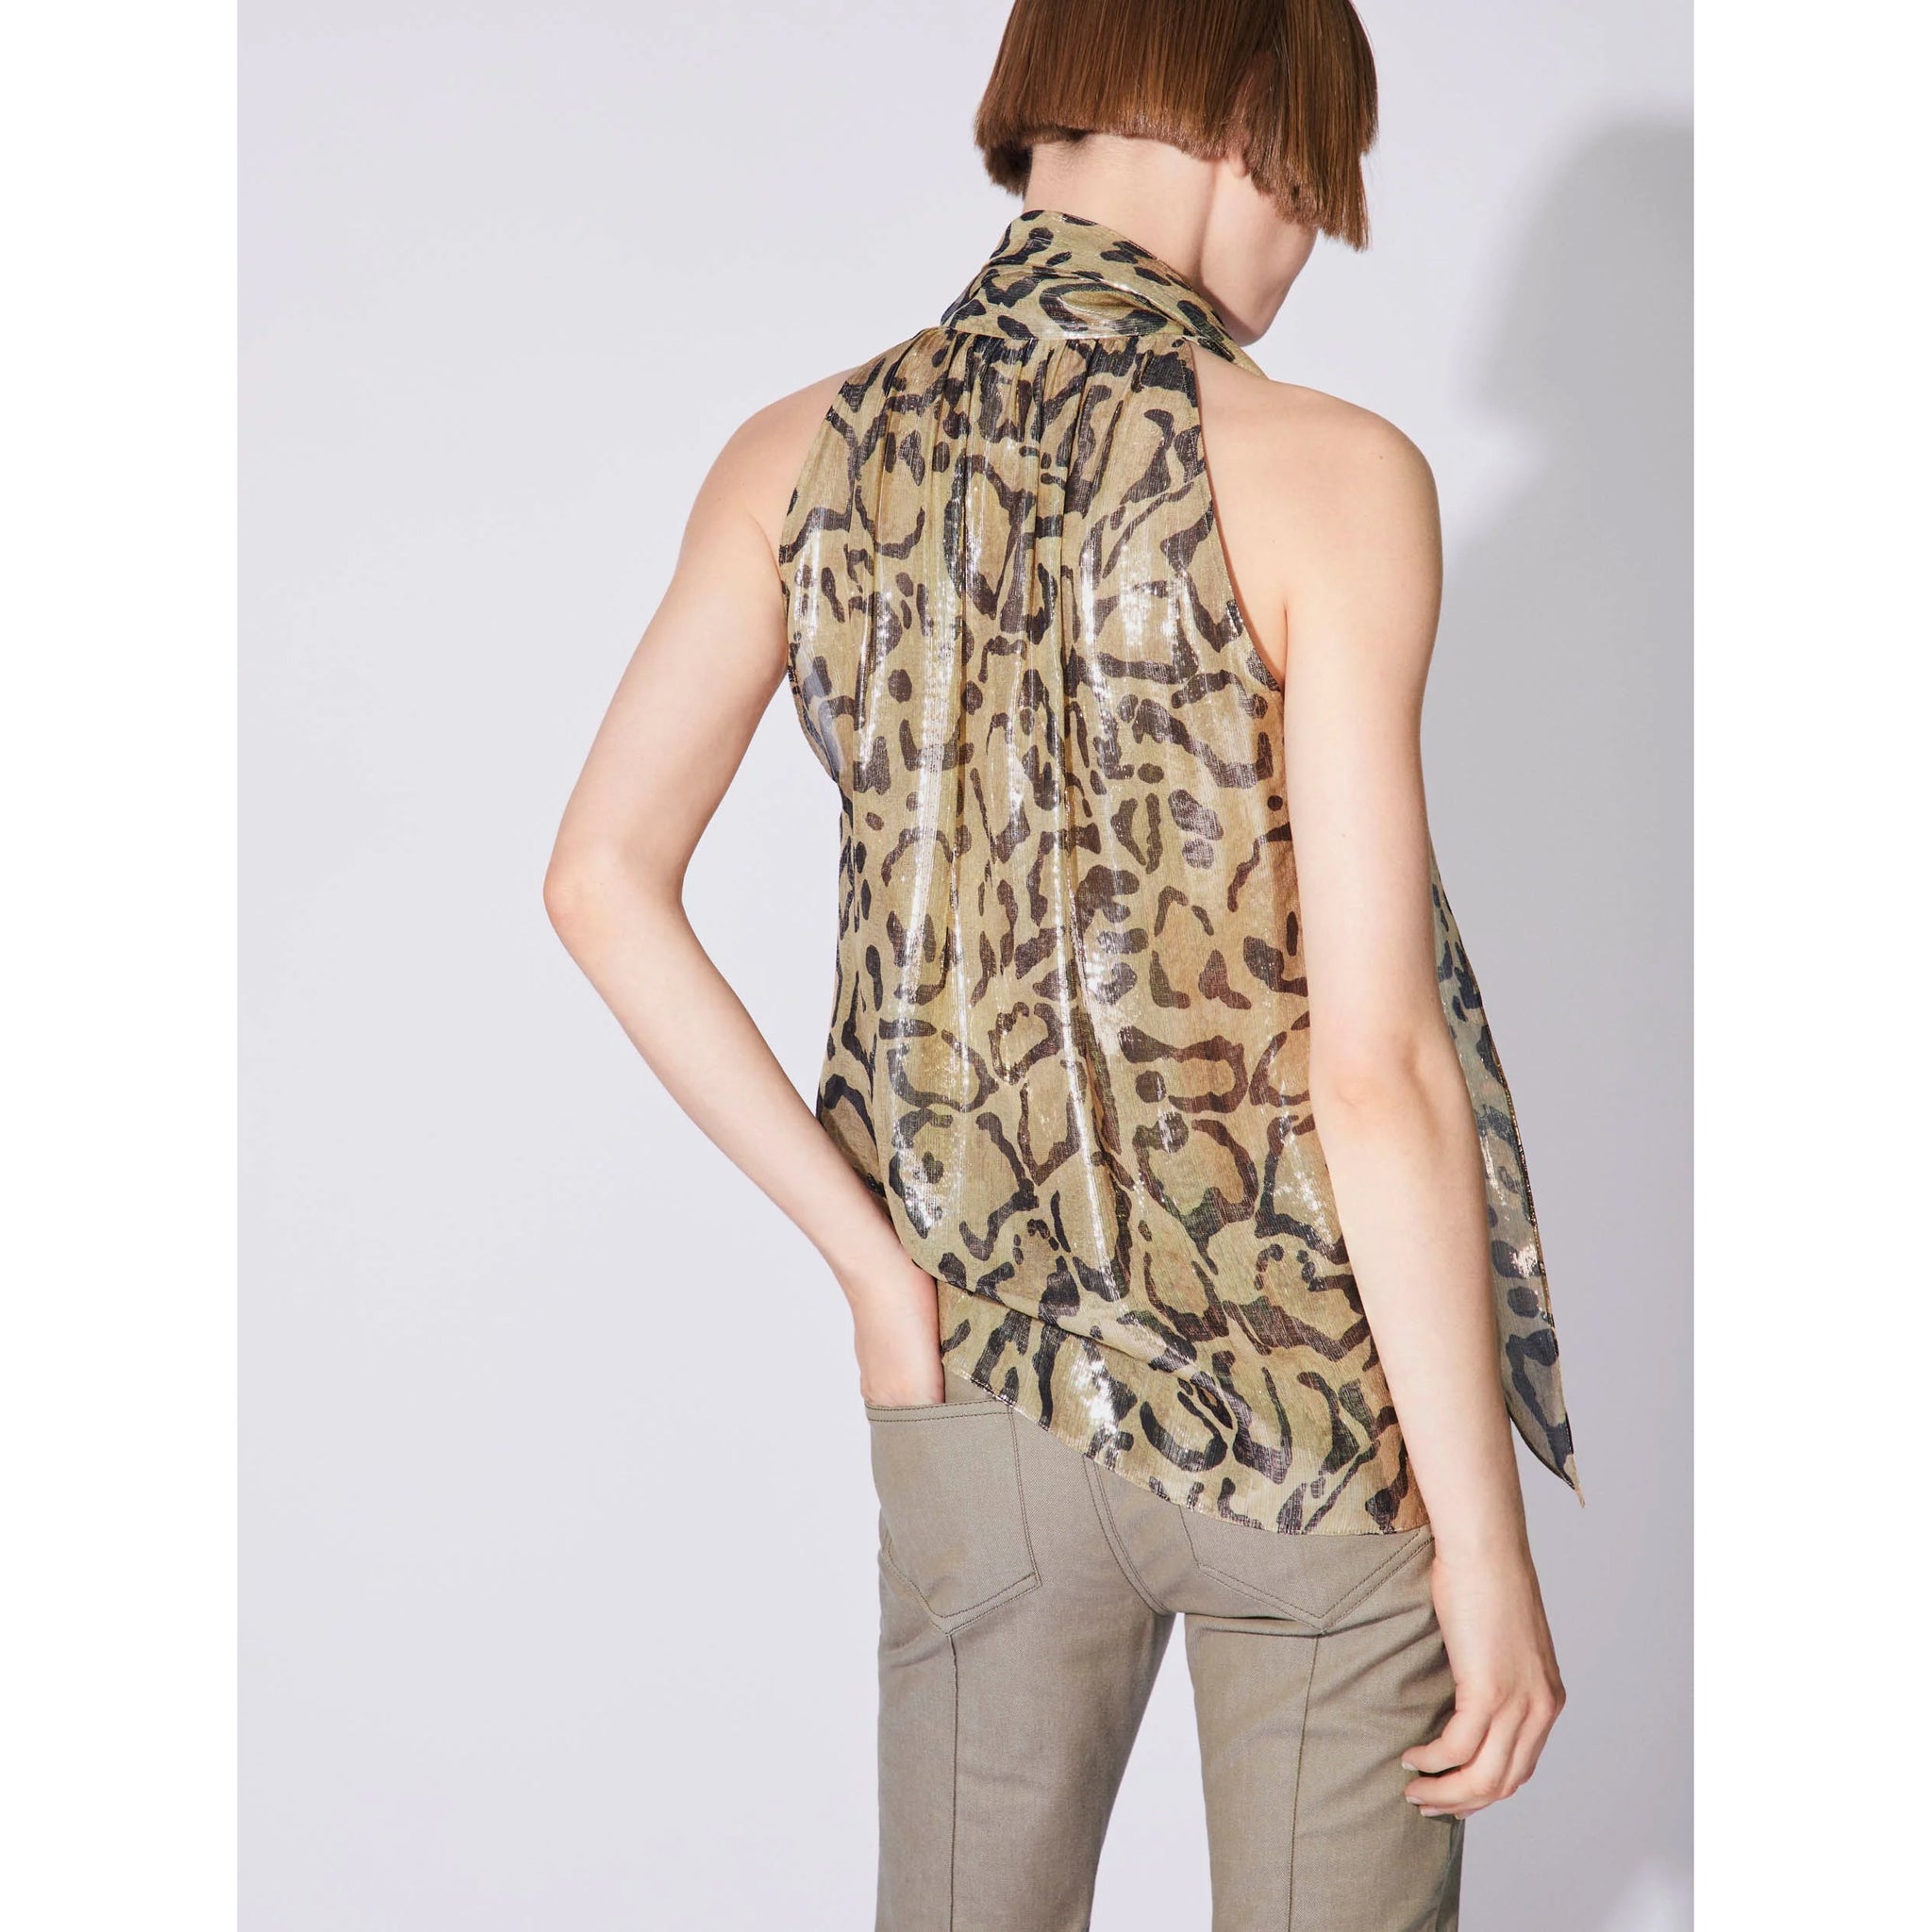 Barbara Bui- Leopard Silk Bow Top